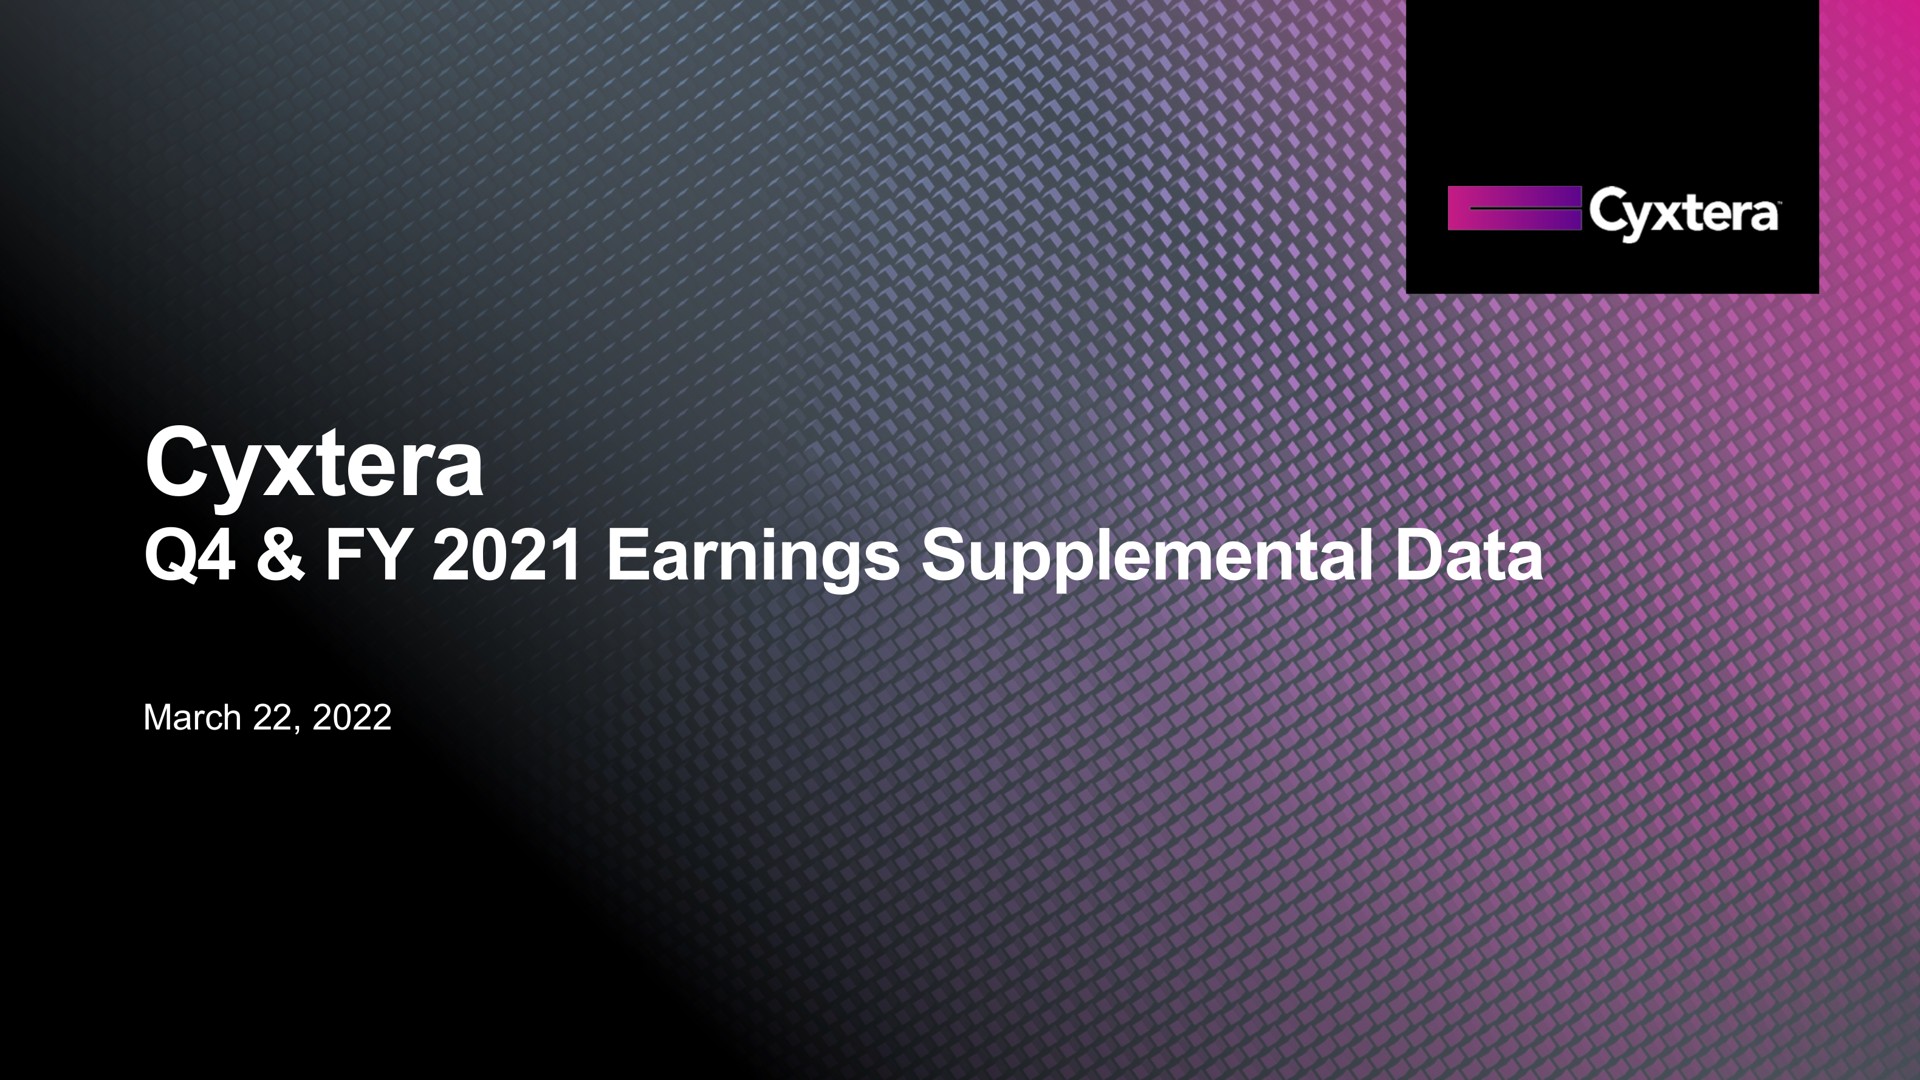 earnings supplemental data one lee | Cyxtera